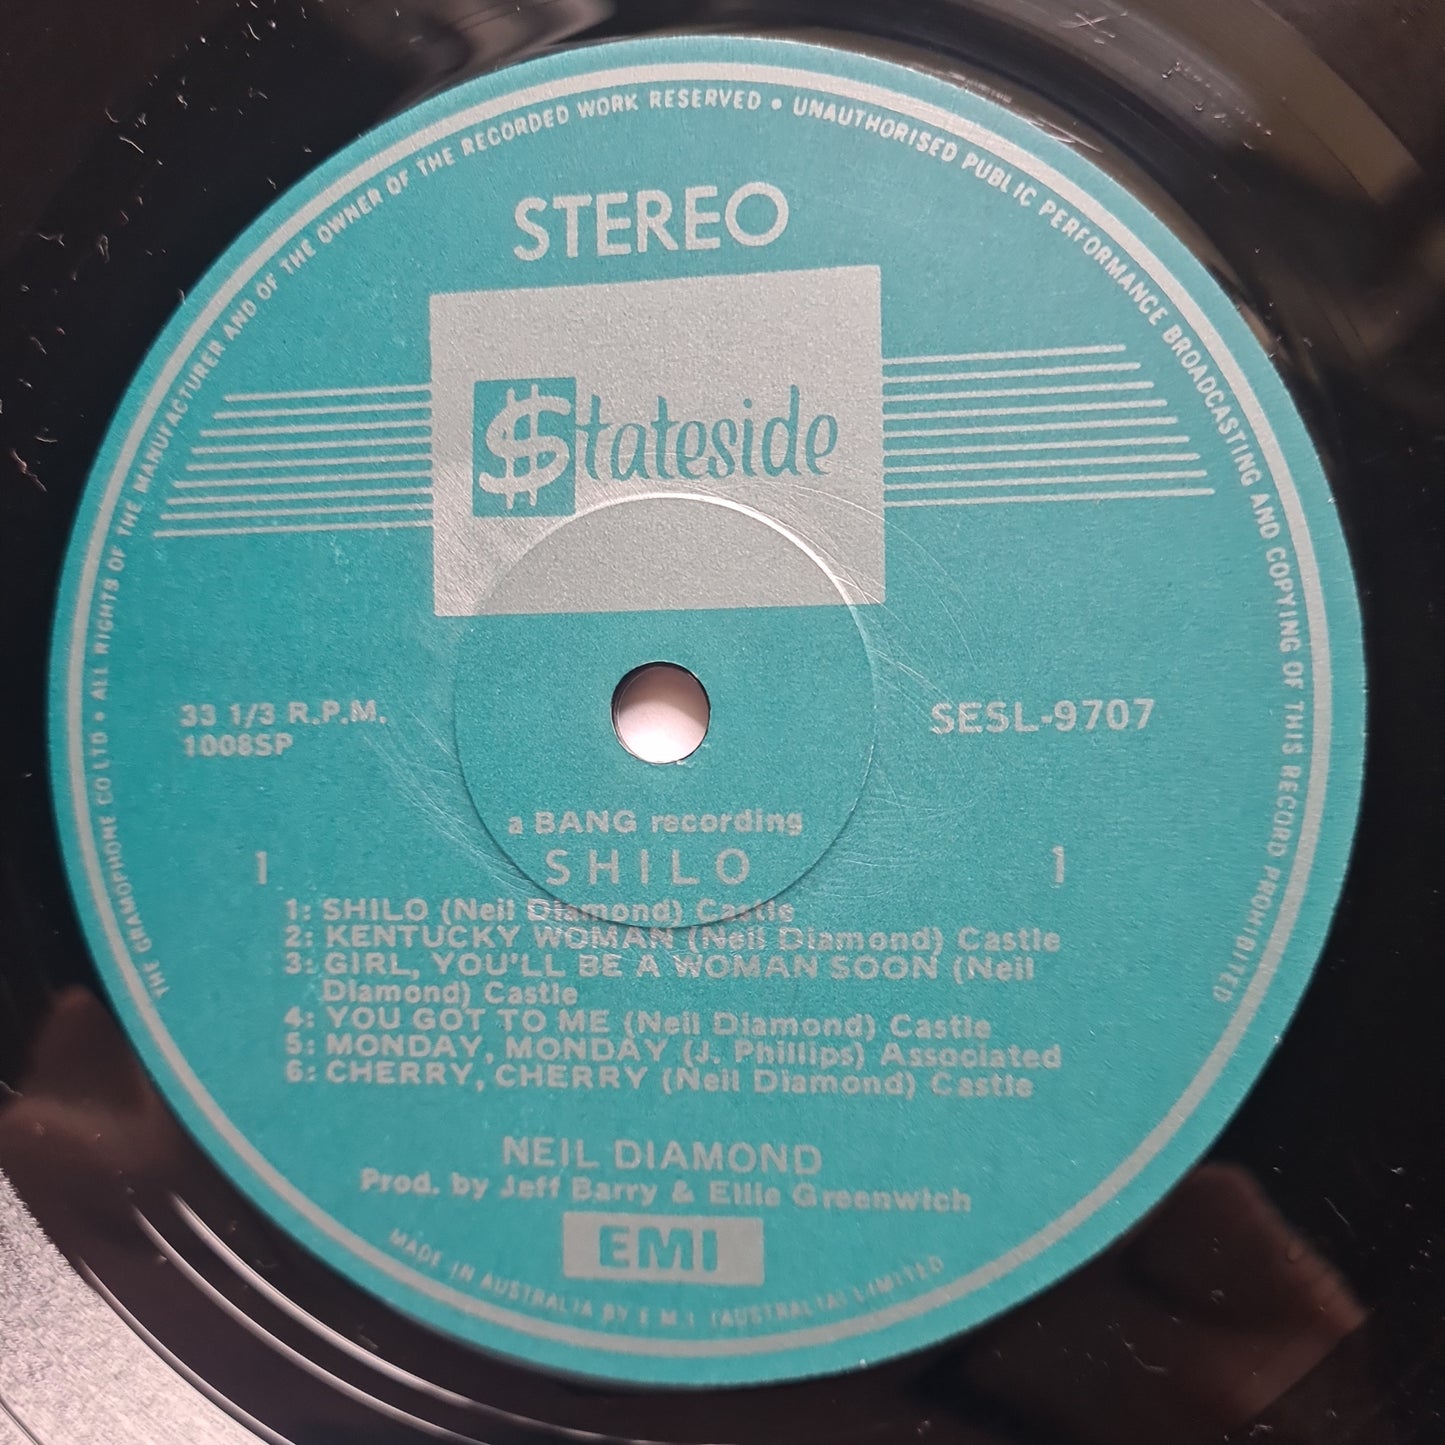 Neil Diamond – Shilo (Greatest Hits) - 1975 - Vinyl Record